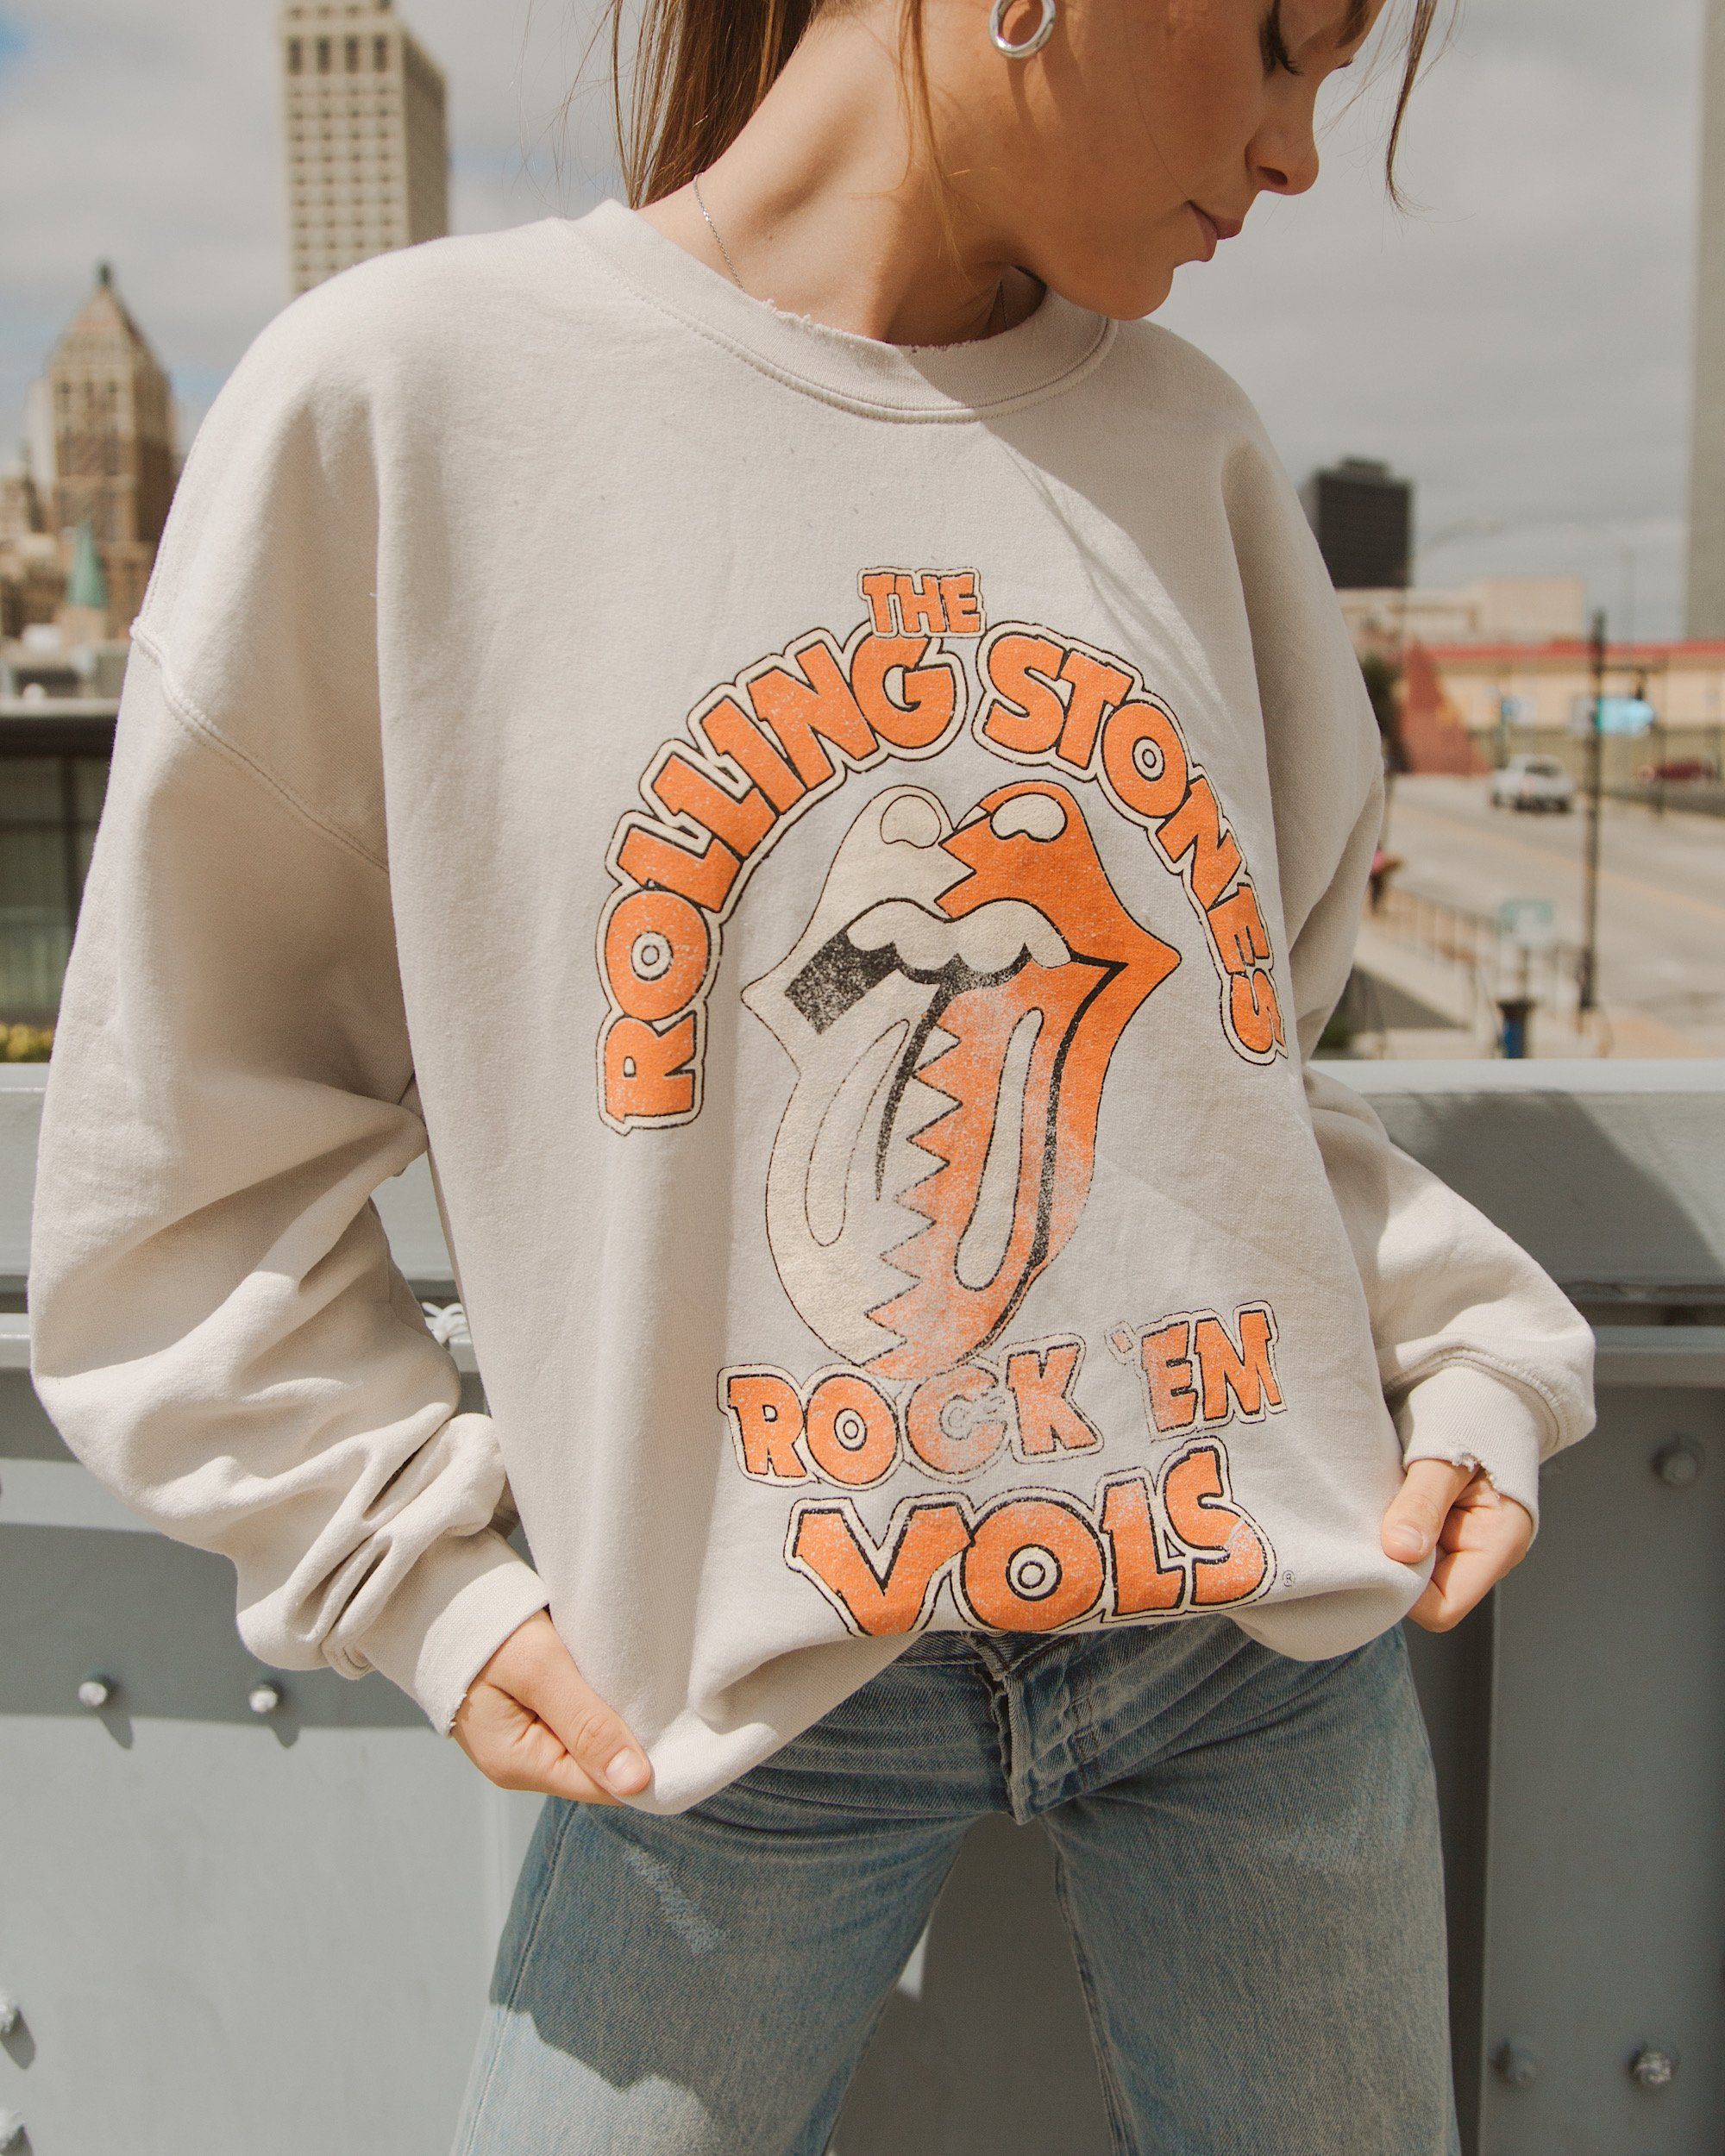 Rolling Stones Rock 'Em Vols Sand Thrifted Sweatshirt - shoplivylu